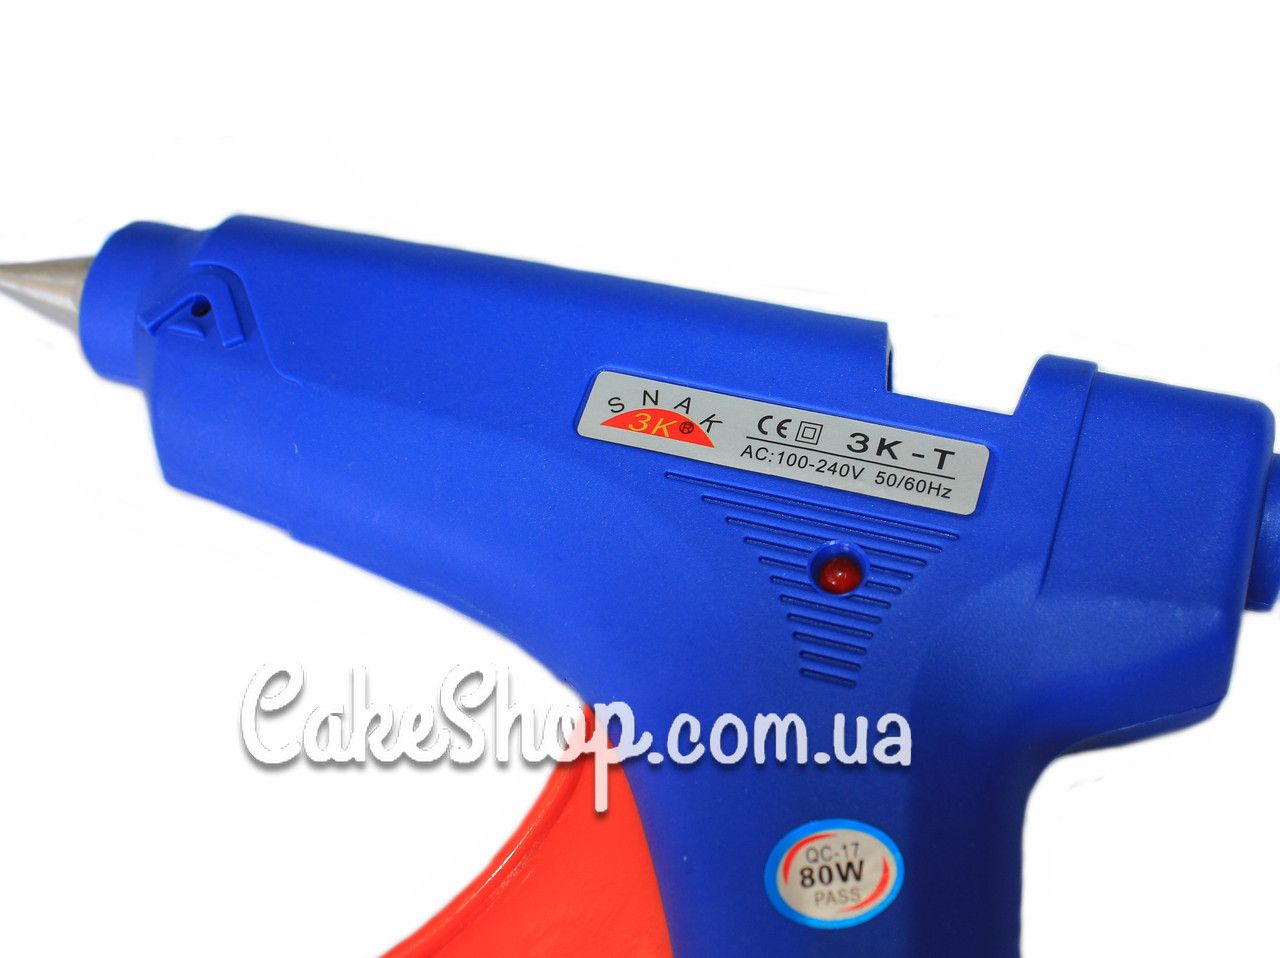 ⋗ Клейовий пістолет Snak (80W, 110-240V), 11mm купити в Україні ➛ CakeShop.com.ua, фото